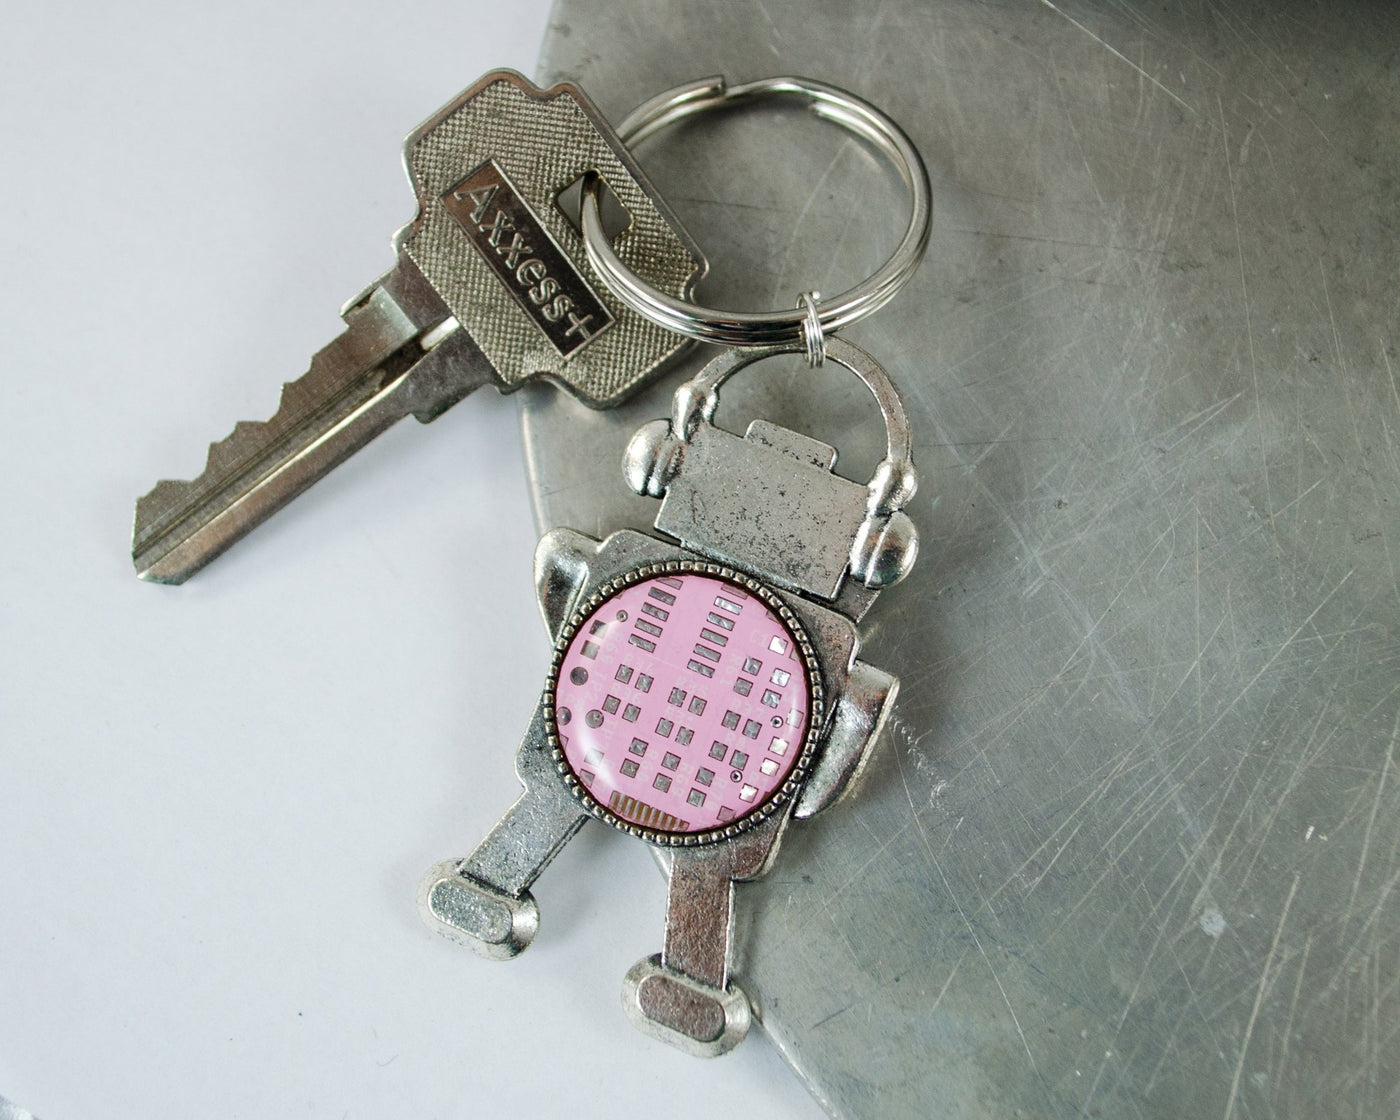 Circuit Board Robot Keychain Pink